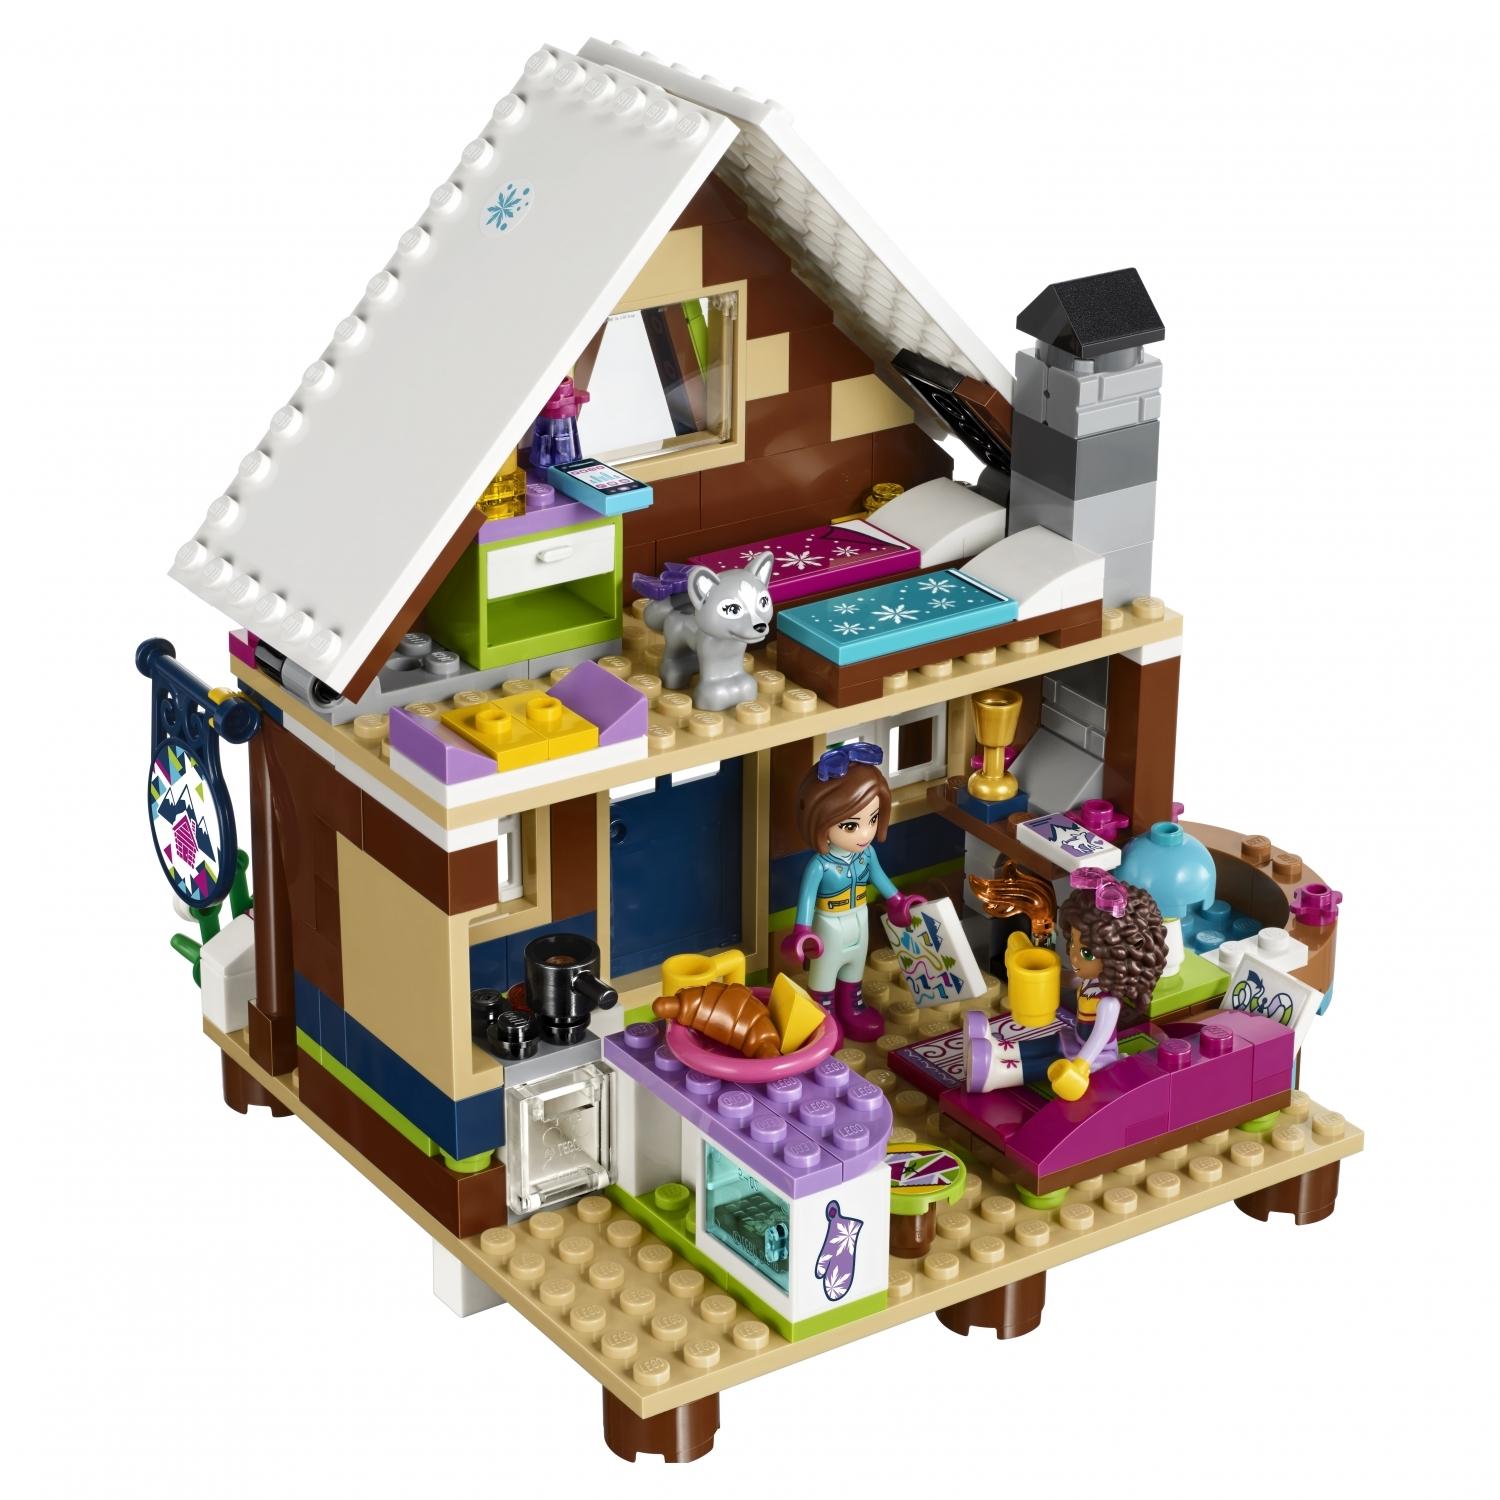 Lego Friends 41323 Горнолыжный курорт: шале